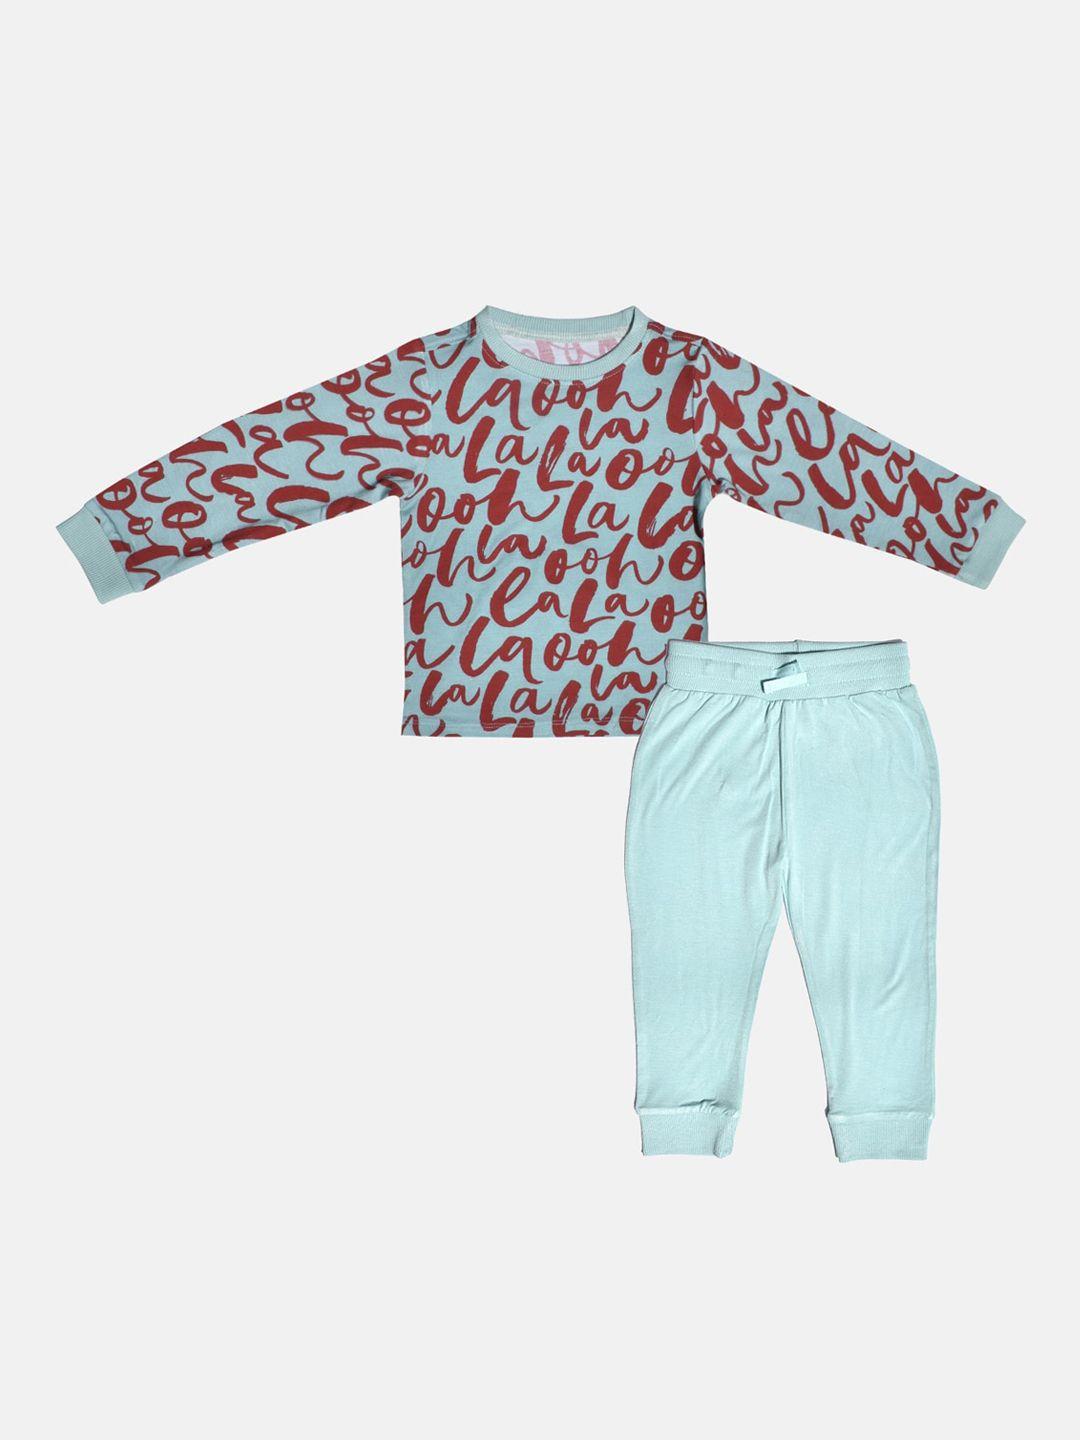 softsens kids blue printed bamboo top with pyjamas